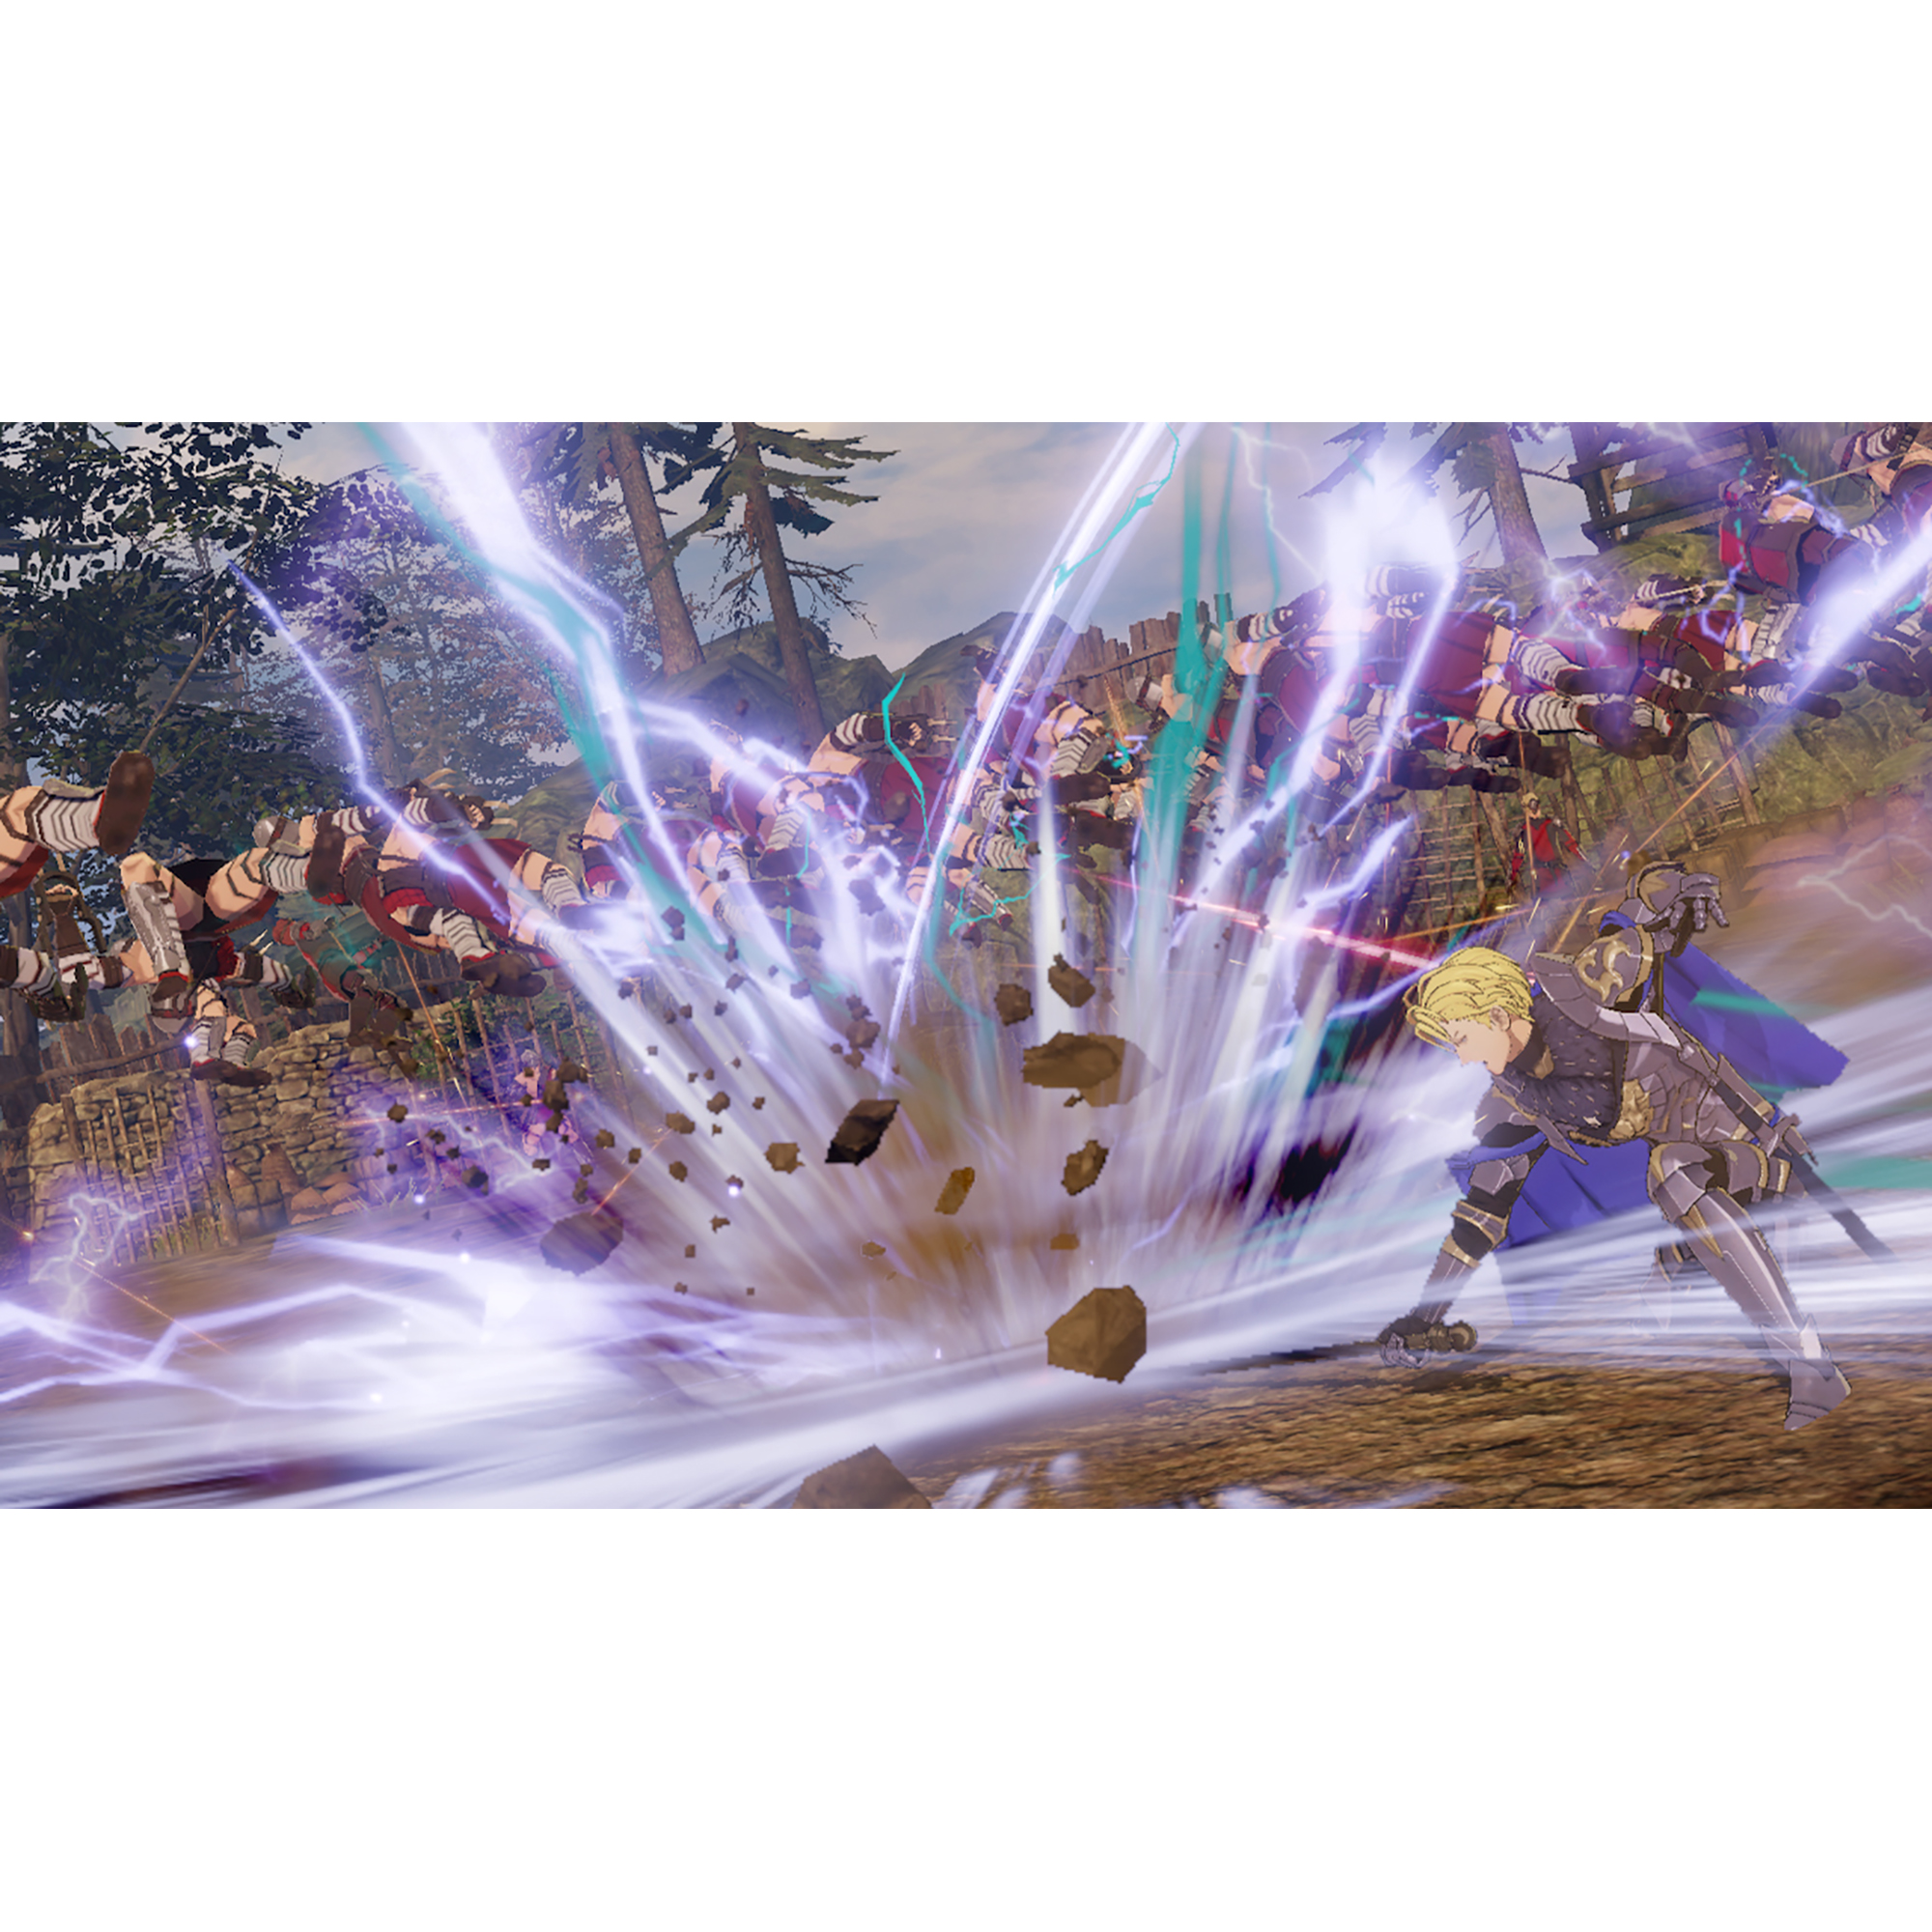 Fire Emblem Warriors: Three Hopes, Nintendo Switch, 045496597924 - image 6 of 14